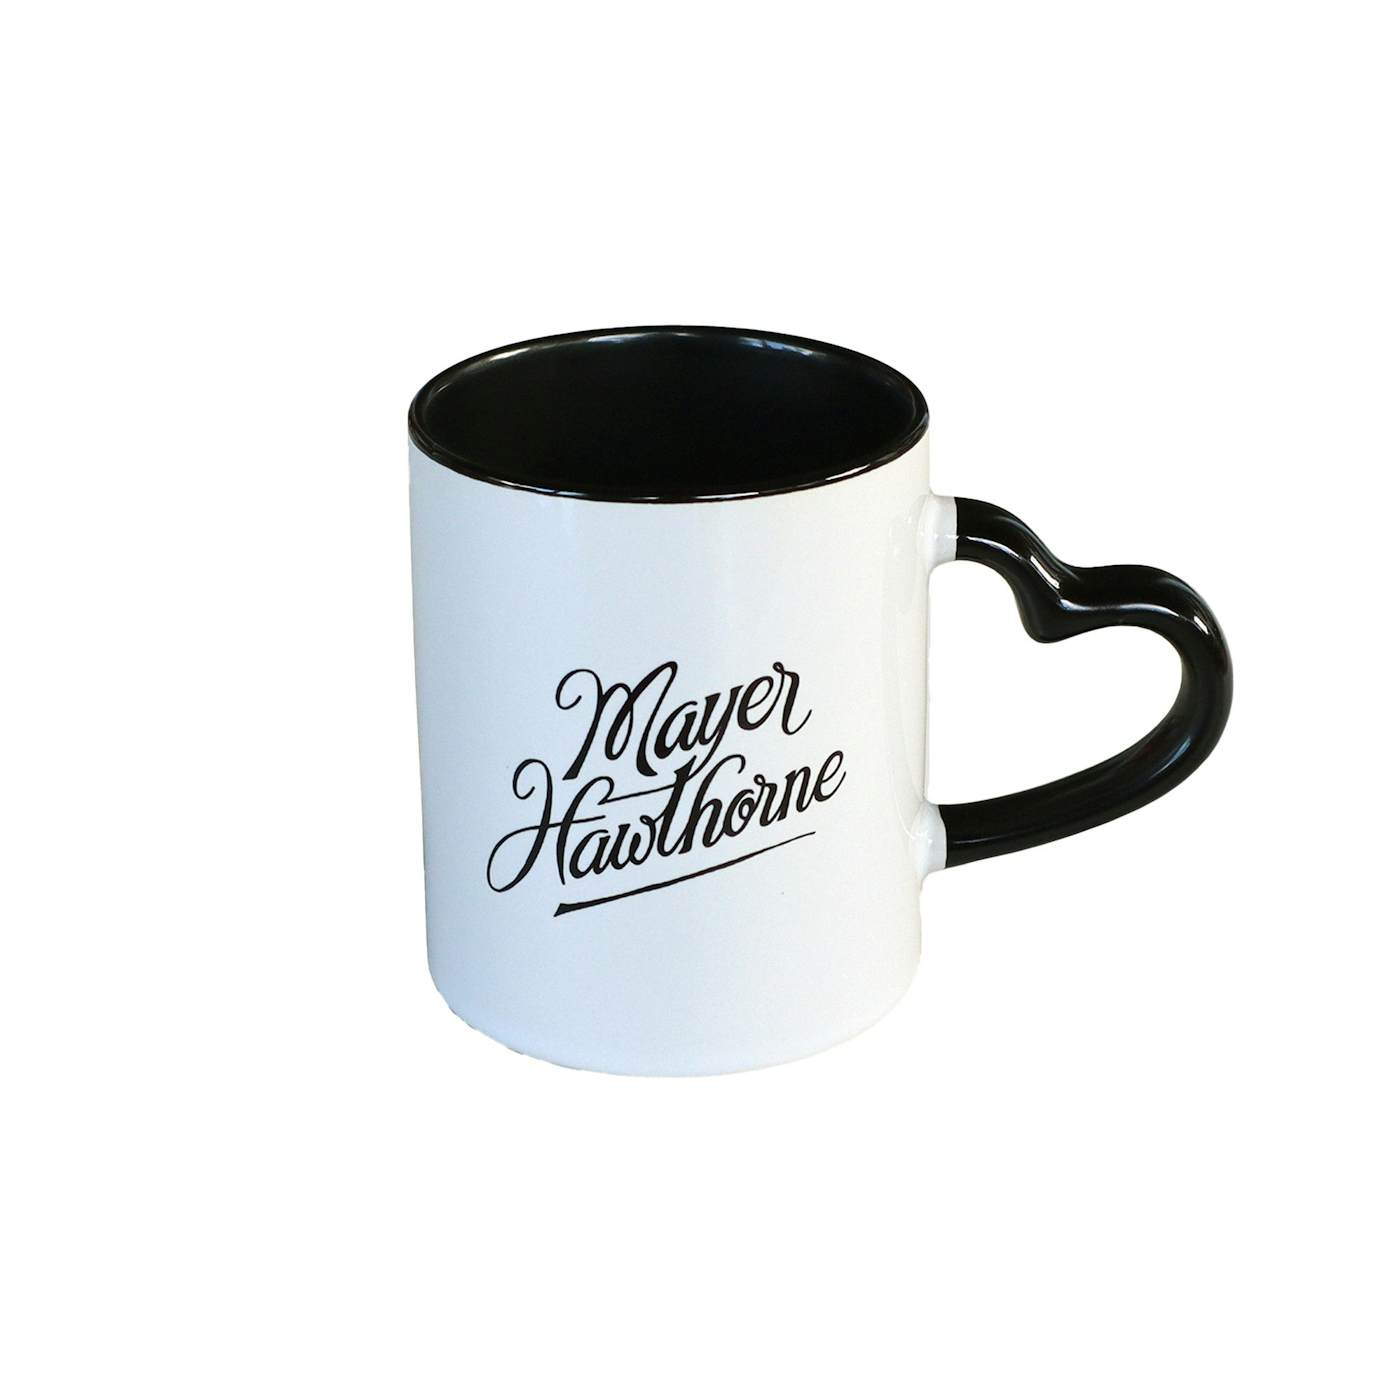 Mayer Hawthorne Heart-Handle Mug